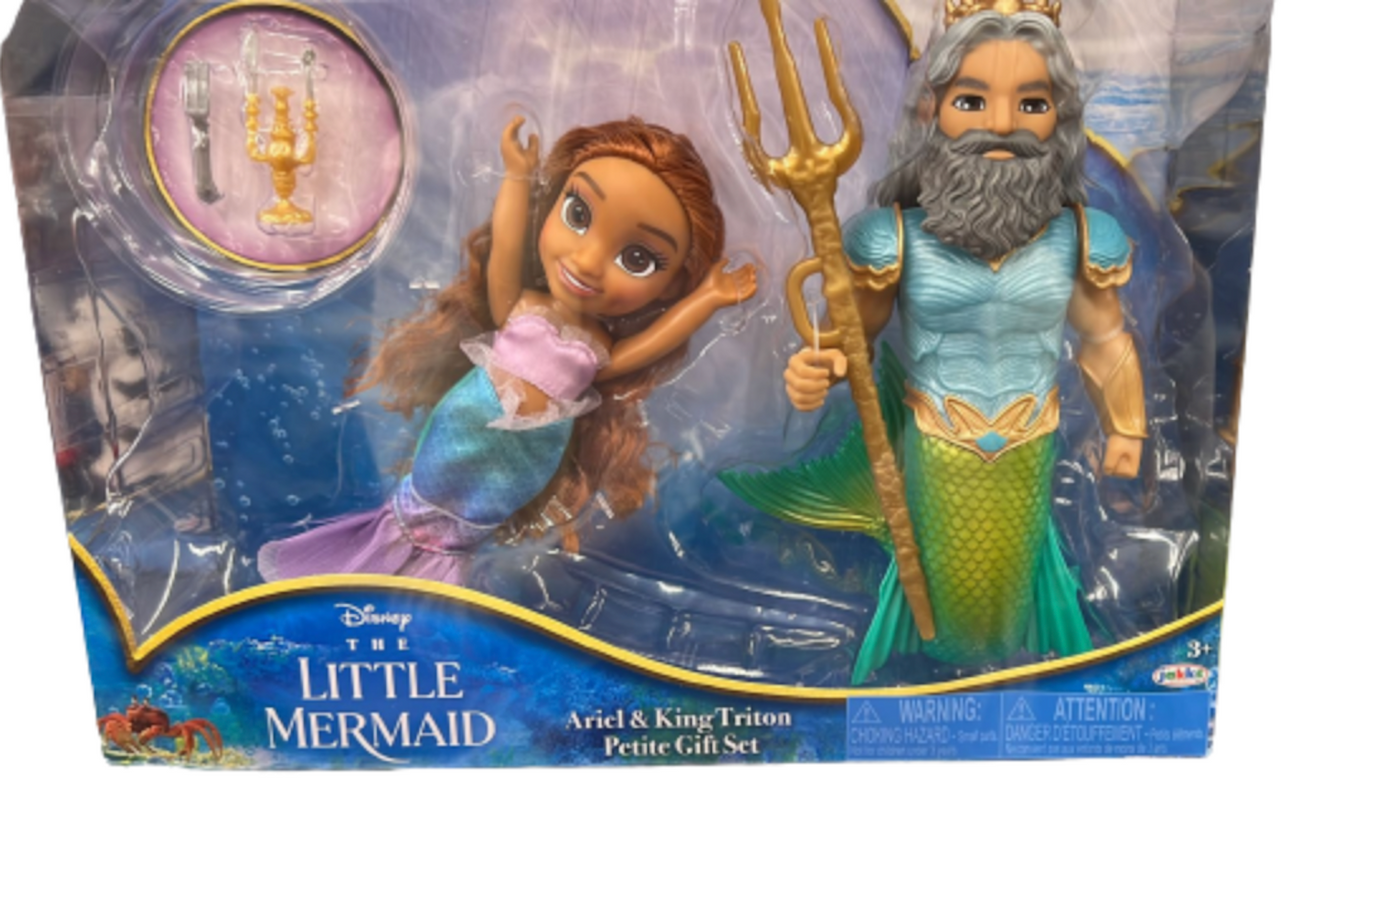 Disney The Little Mermaid Live Action Ariel & King Triton Petite Gift Set New